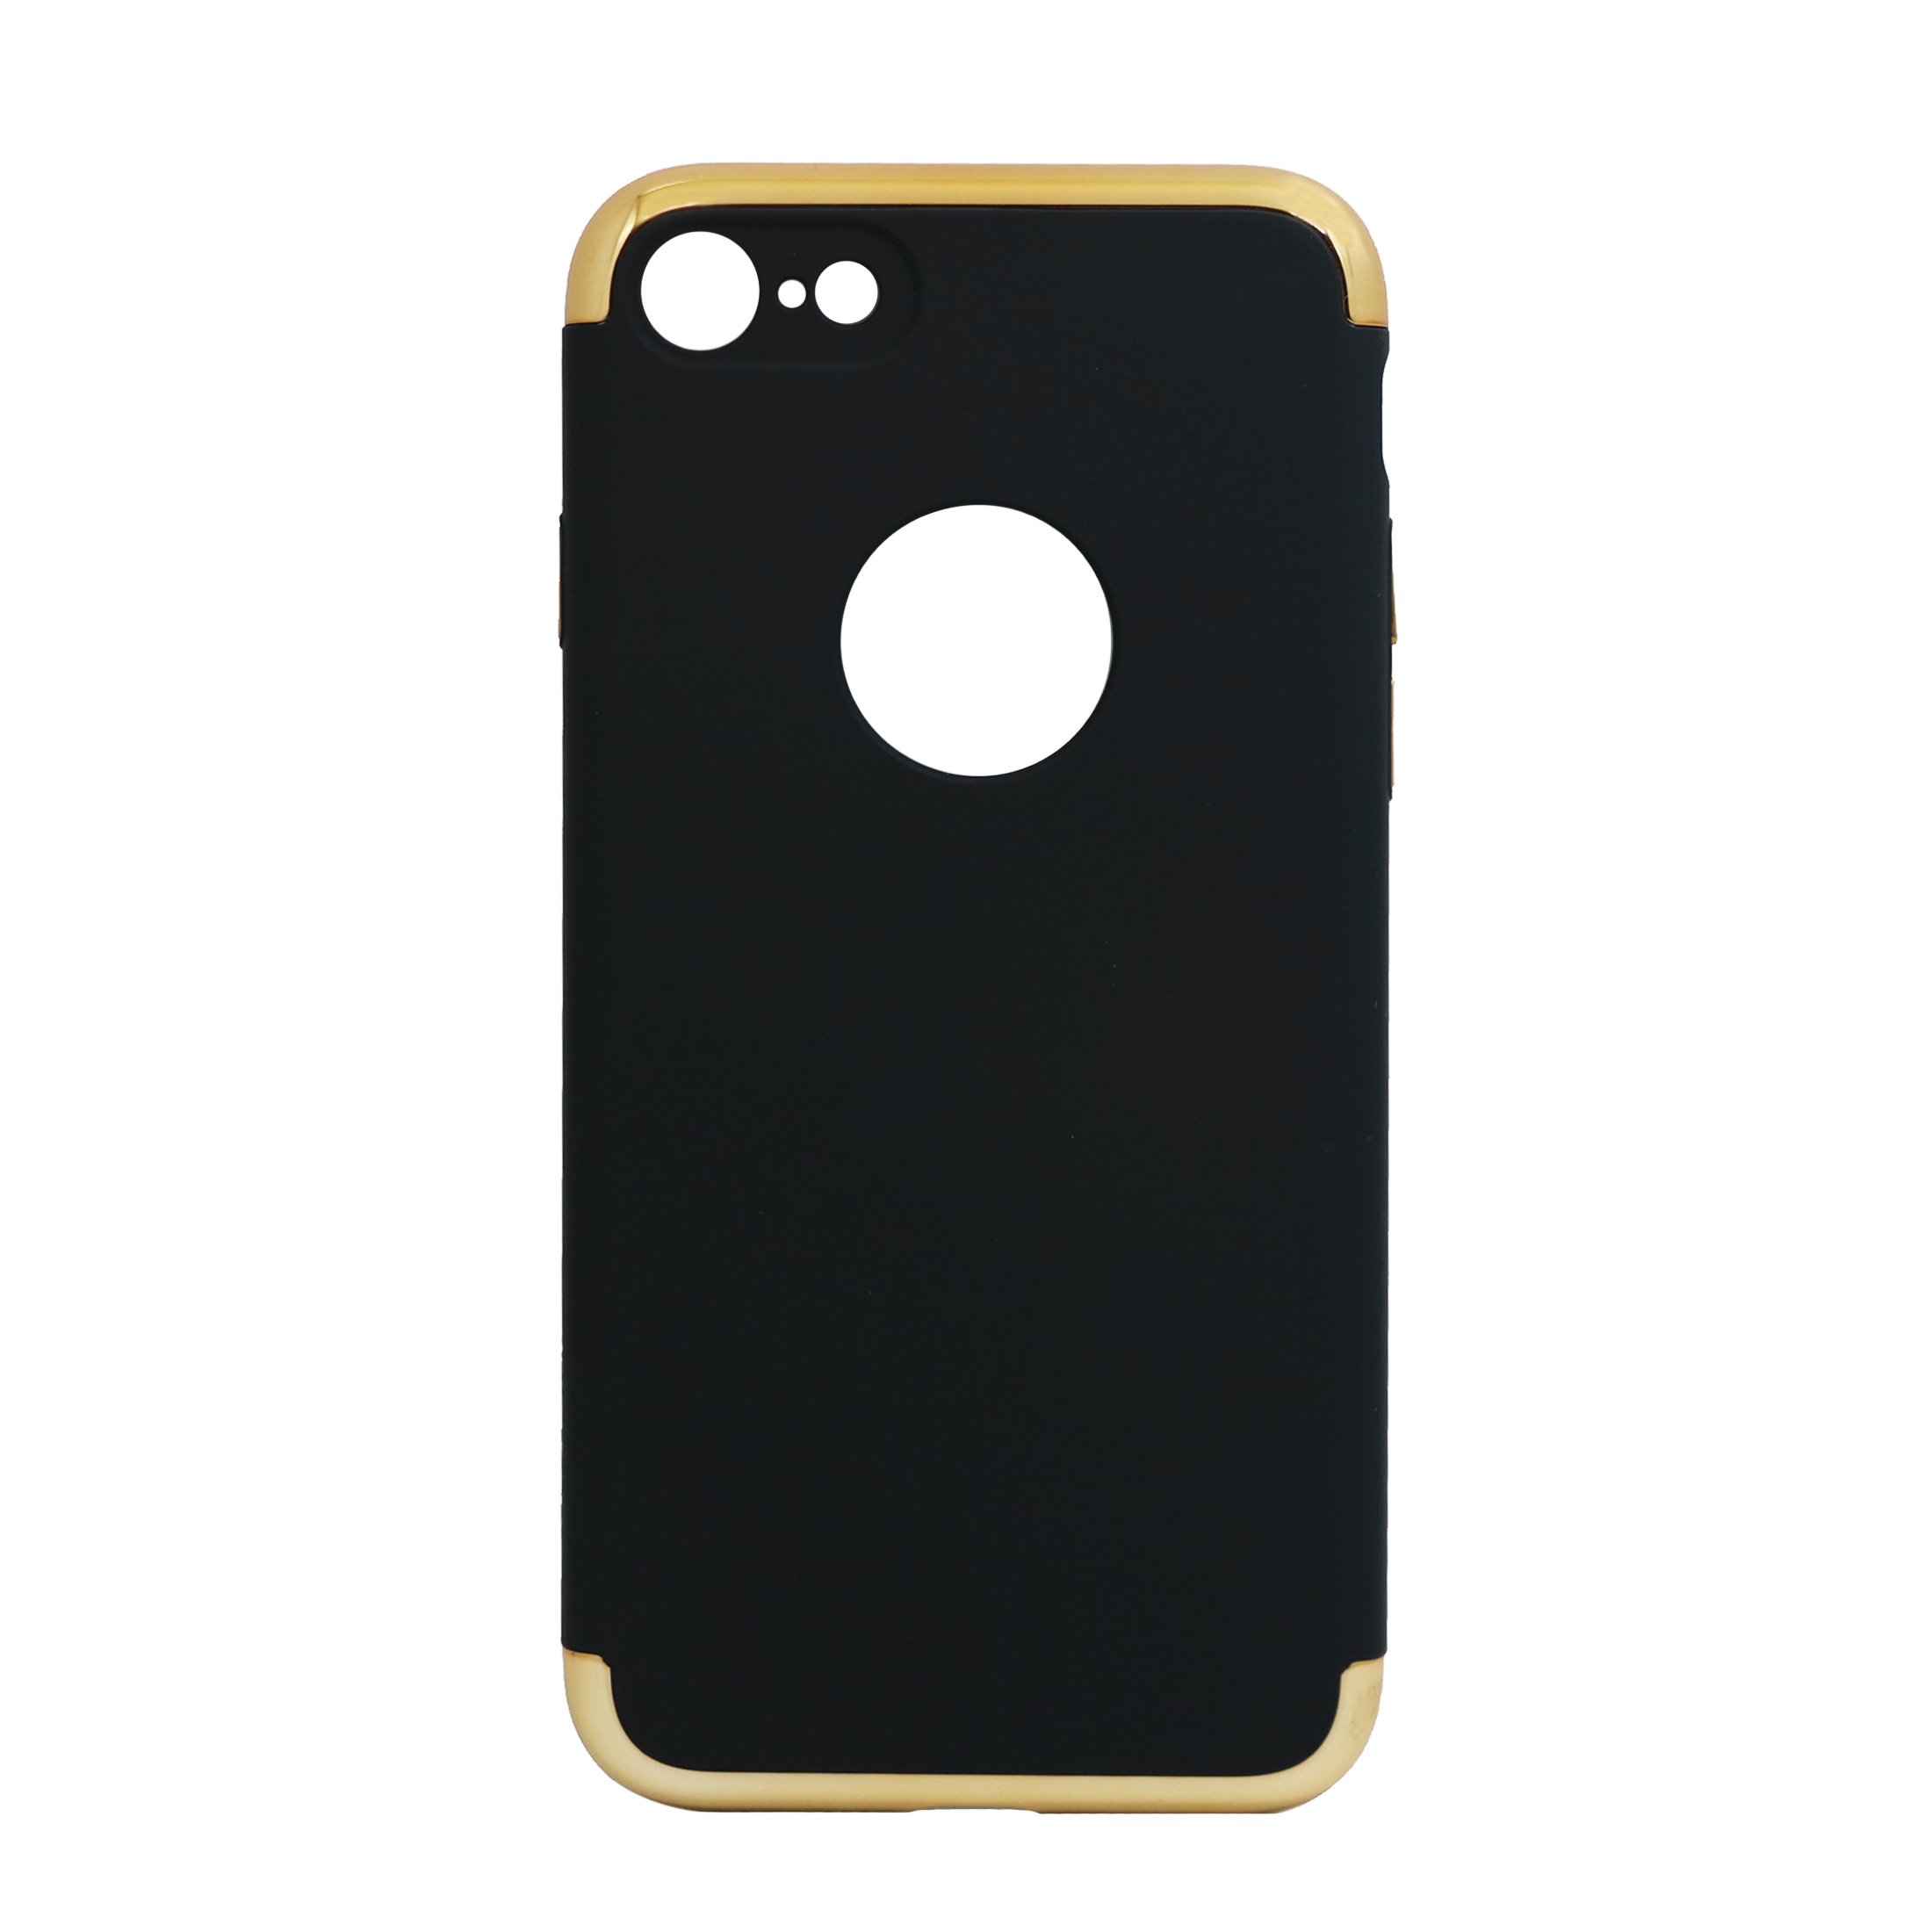 کاور جوی روم مدل LS-001 مناسب برای گوشی موبایل اپل iphone 7